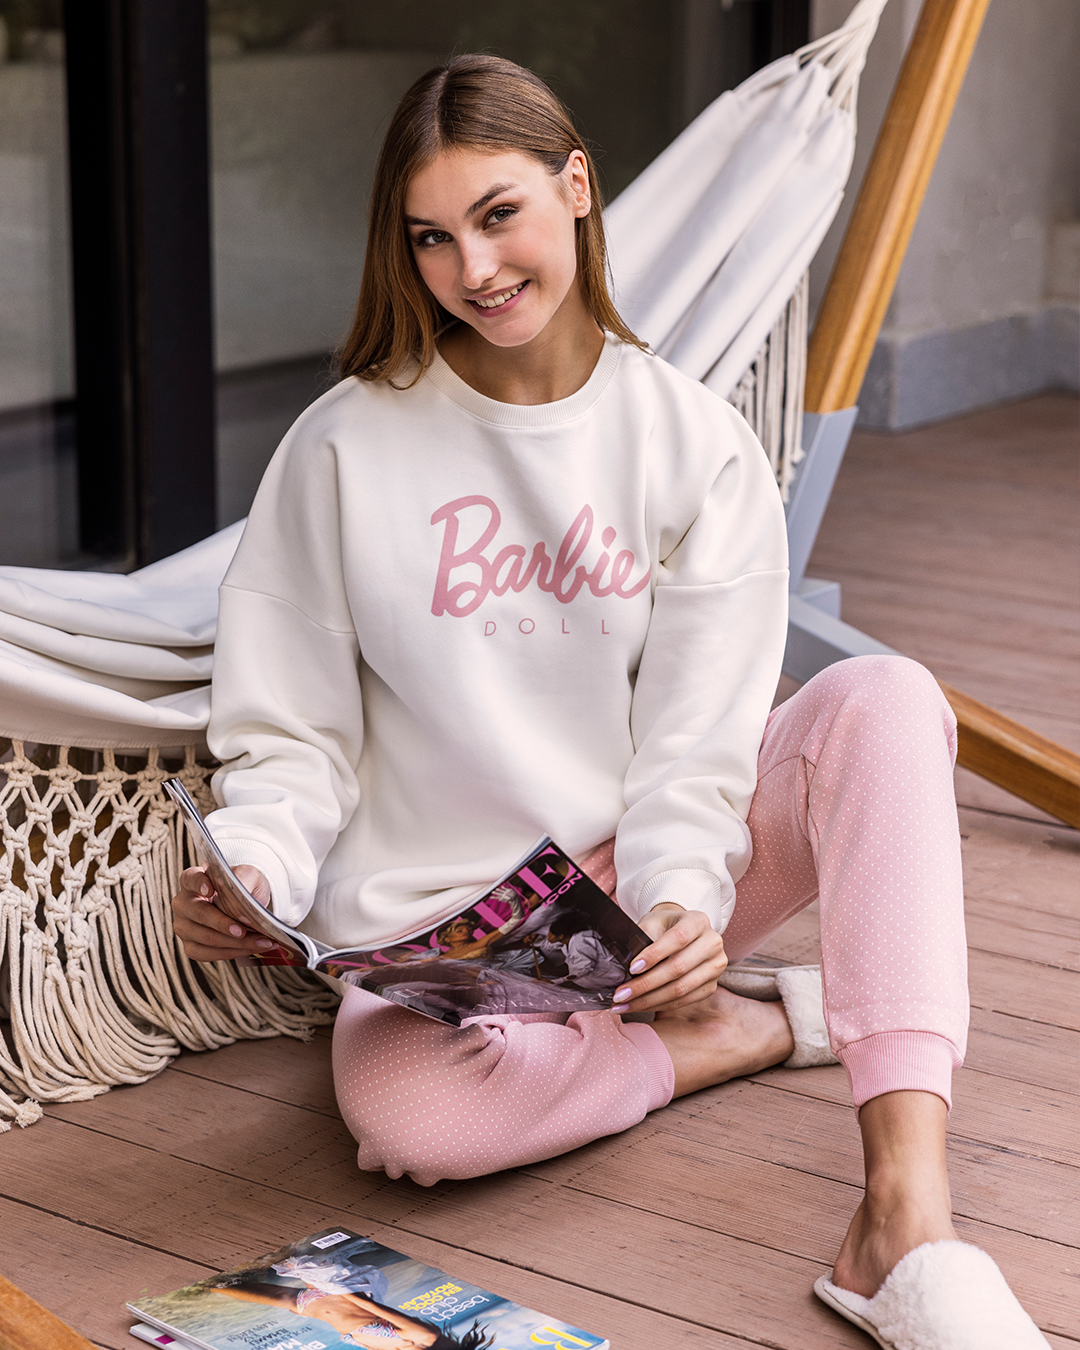 Barbie long sleeve pajamas for women